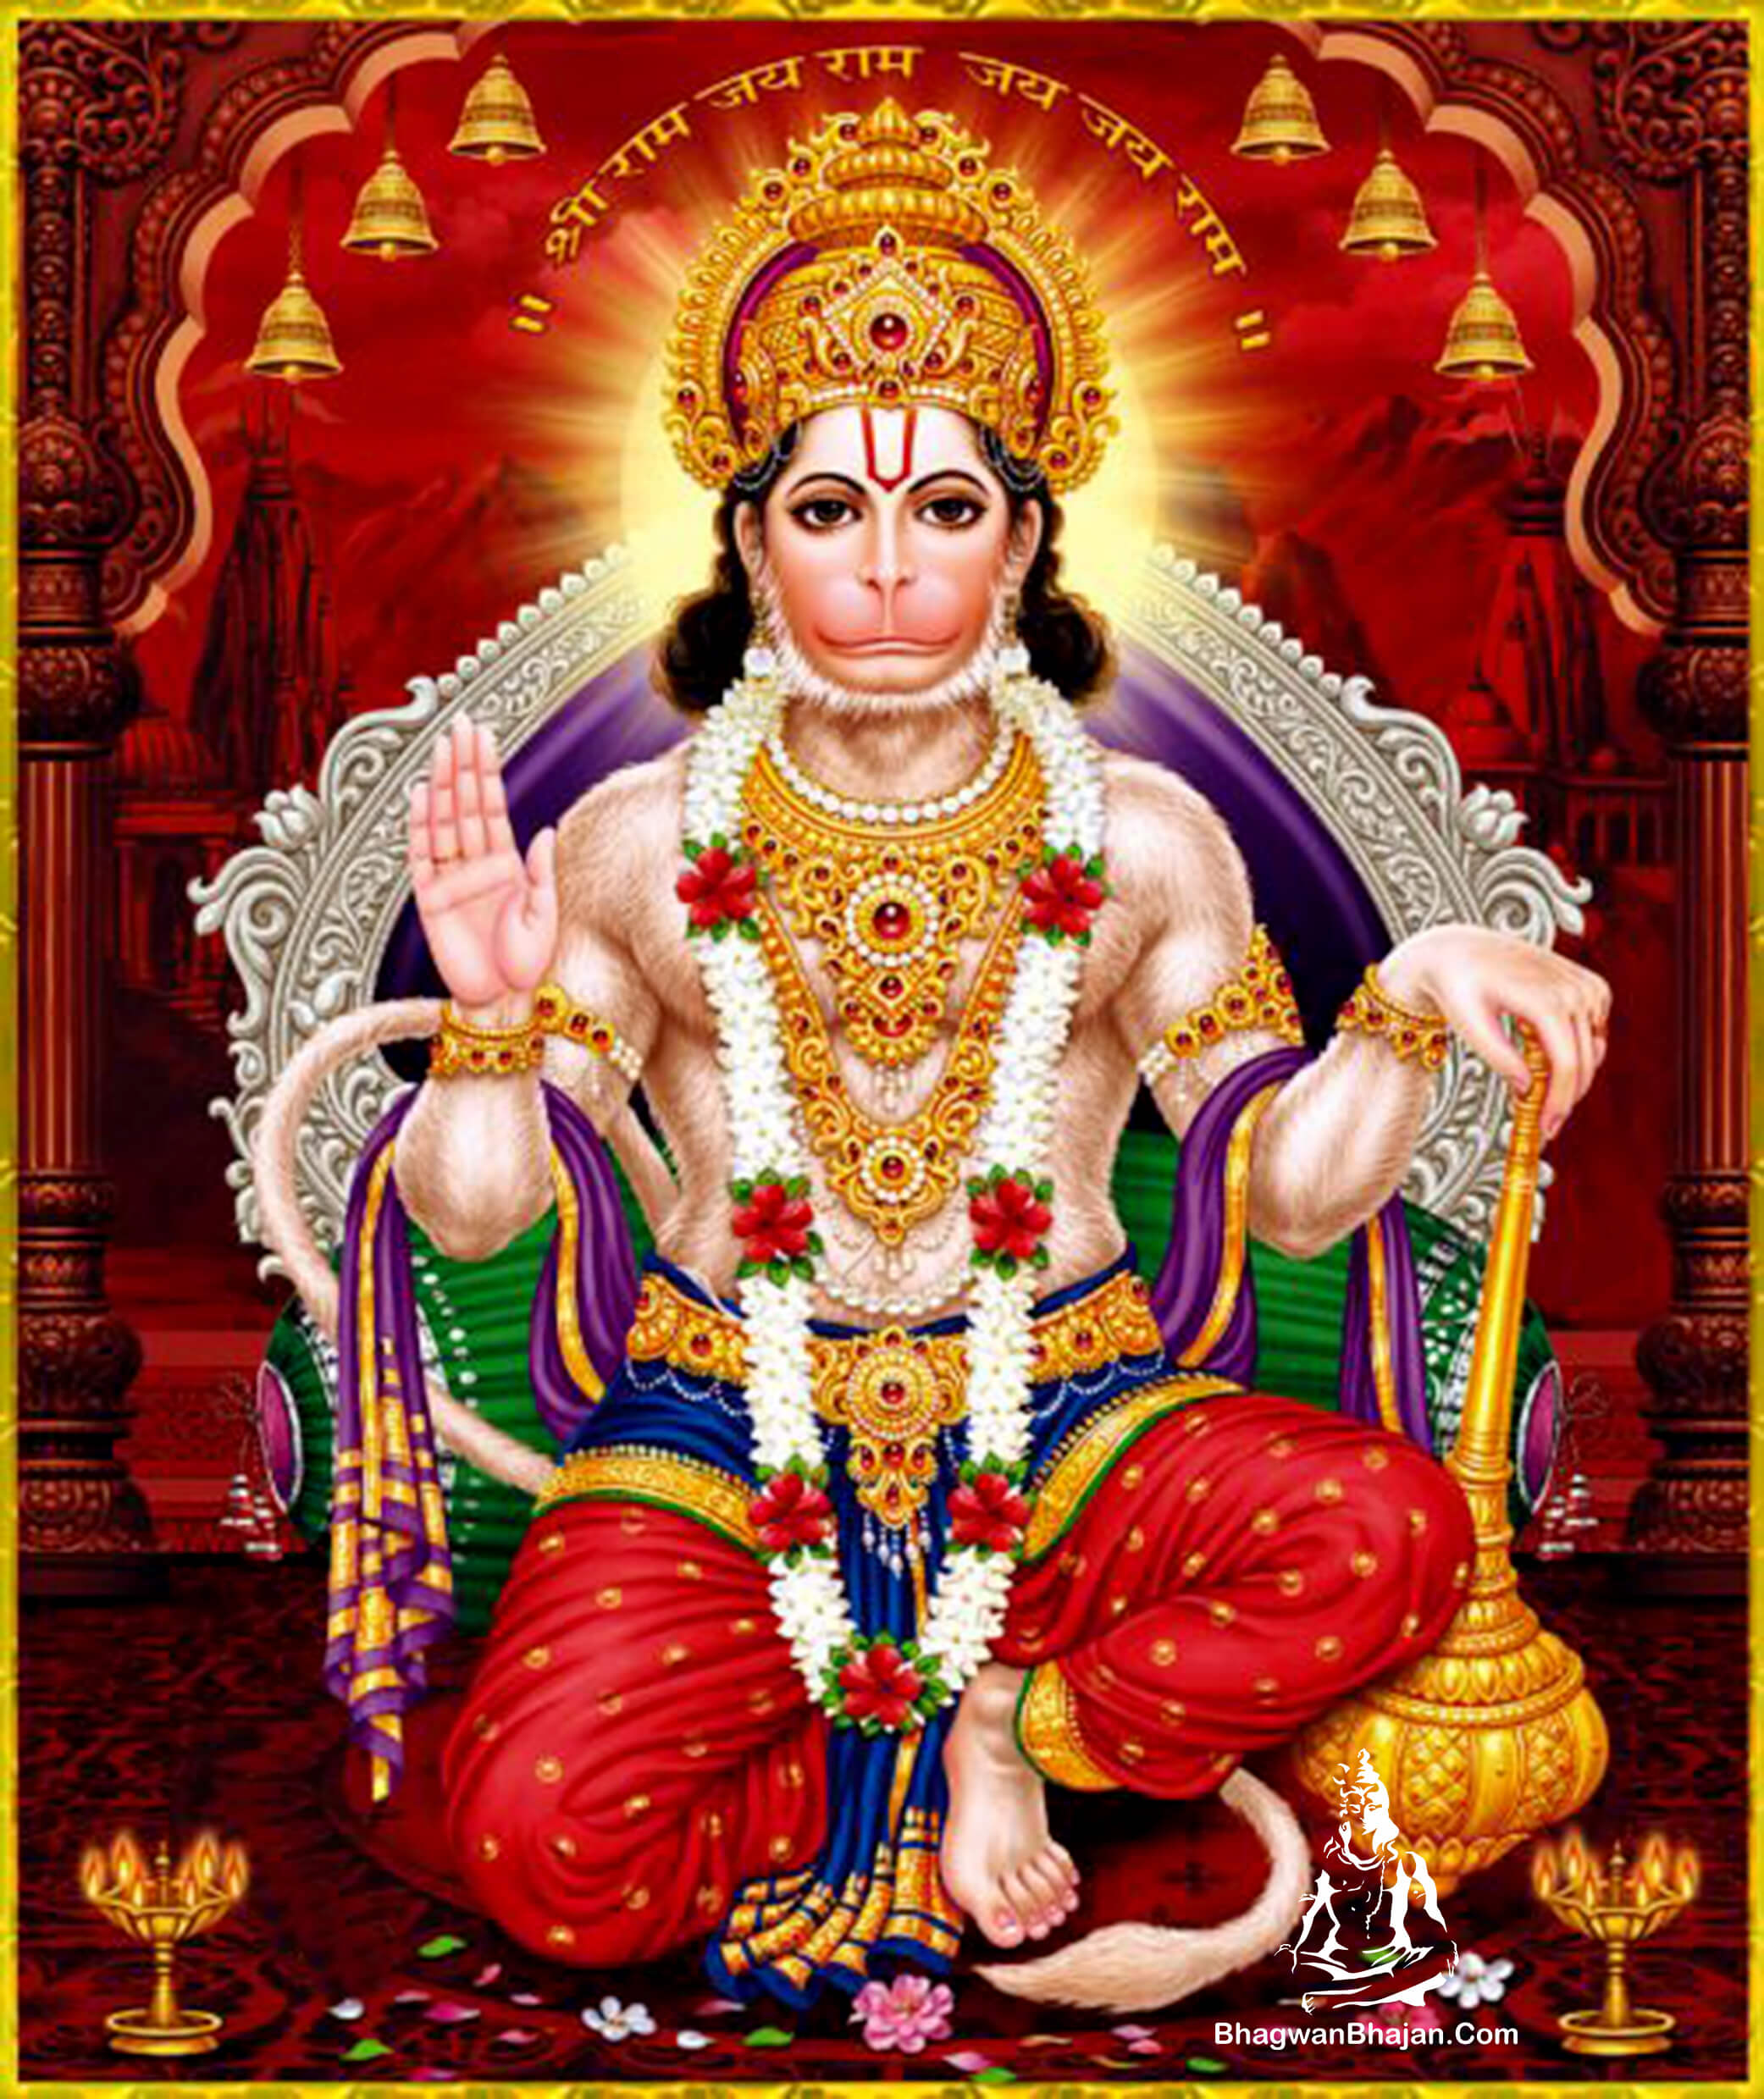 जय शर रम Ram Param Bhakta Hanuman  Shri ram photo Lord rama images  God illustrations